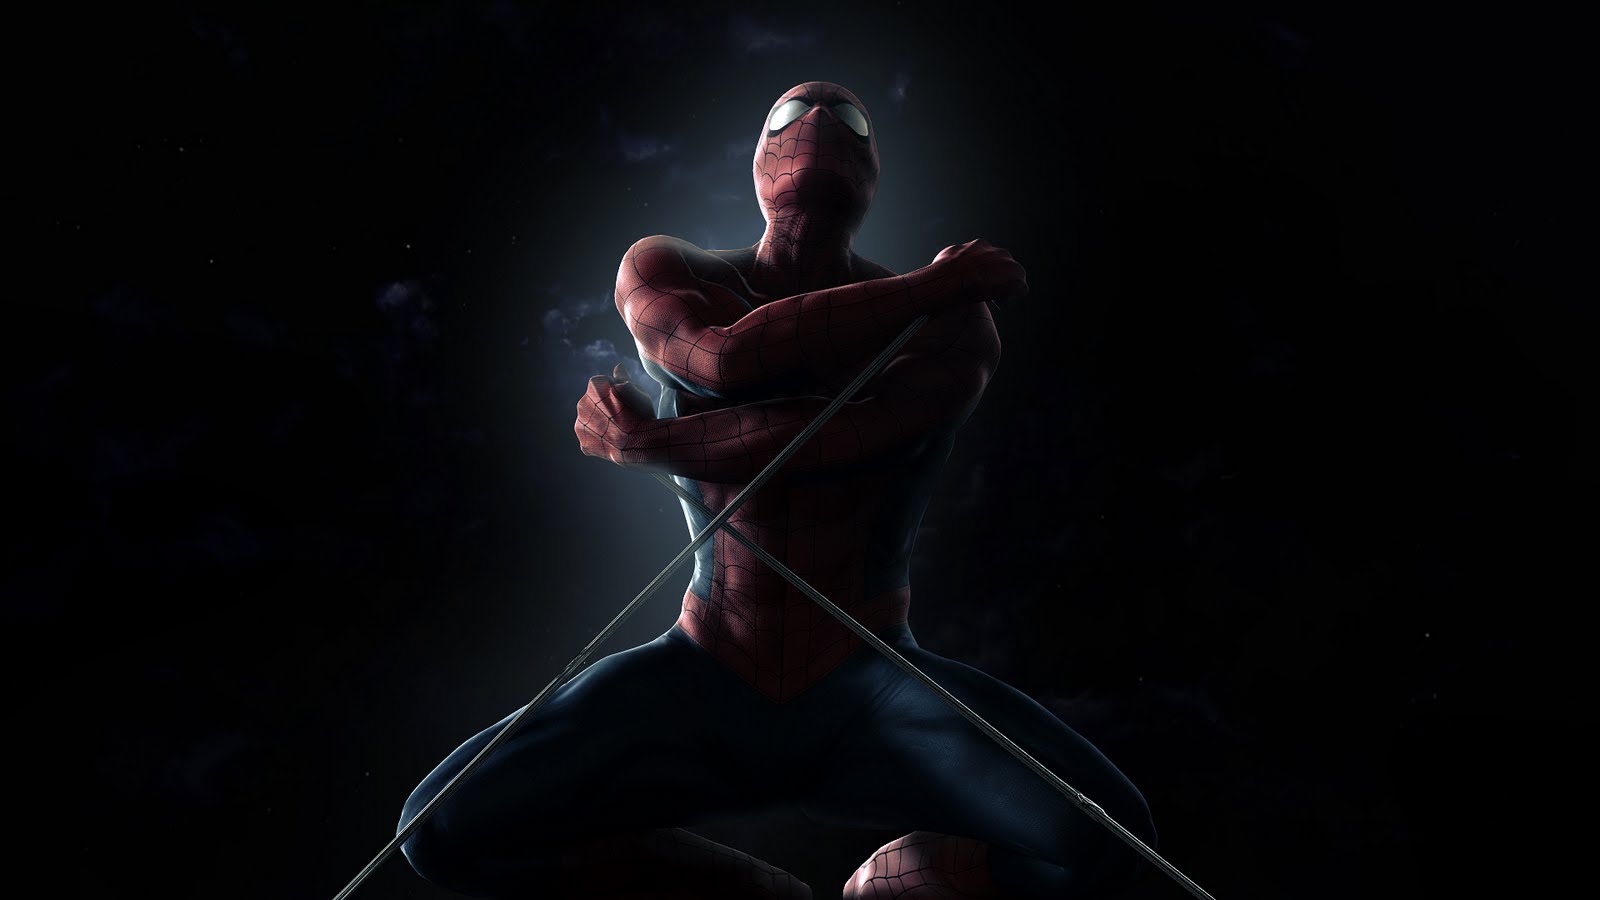 Spiderman Hd Wallpapers | Free Image for Desktop, Laptop, Tablet ...